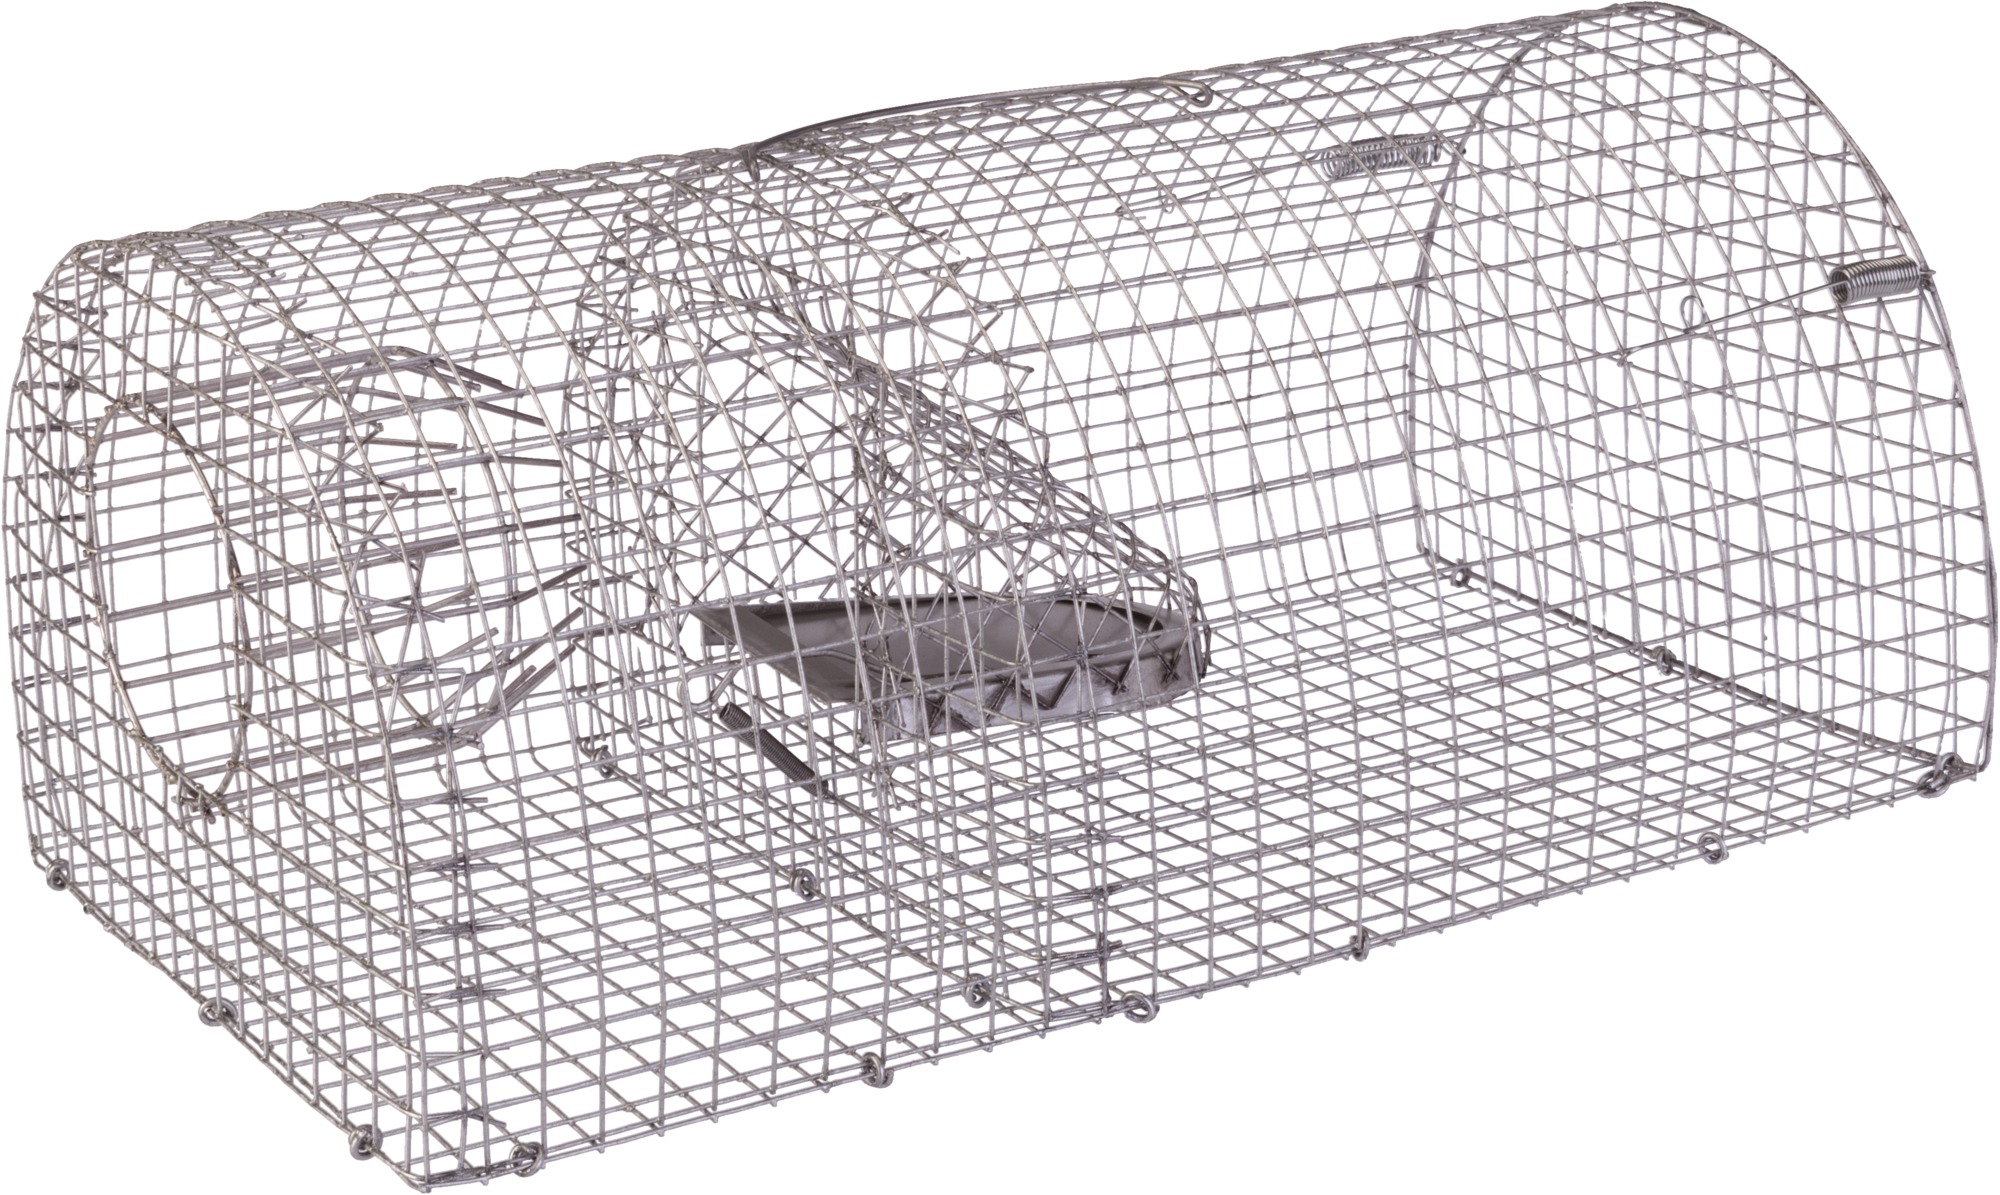 Nasse à rat multiprise forme tunnel Masy - Grillage galvanisé - Dimensions 40 x 23 x 18 cm - Maille 13 x 13 mm